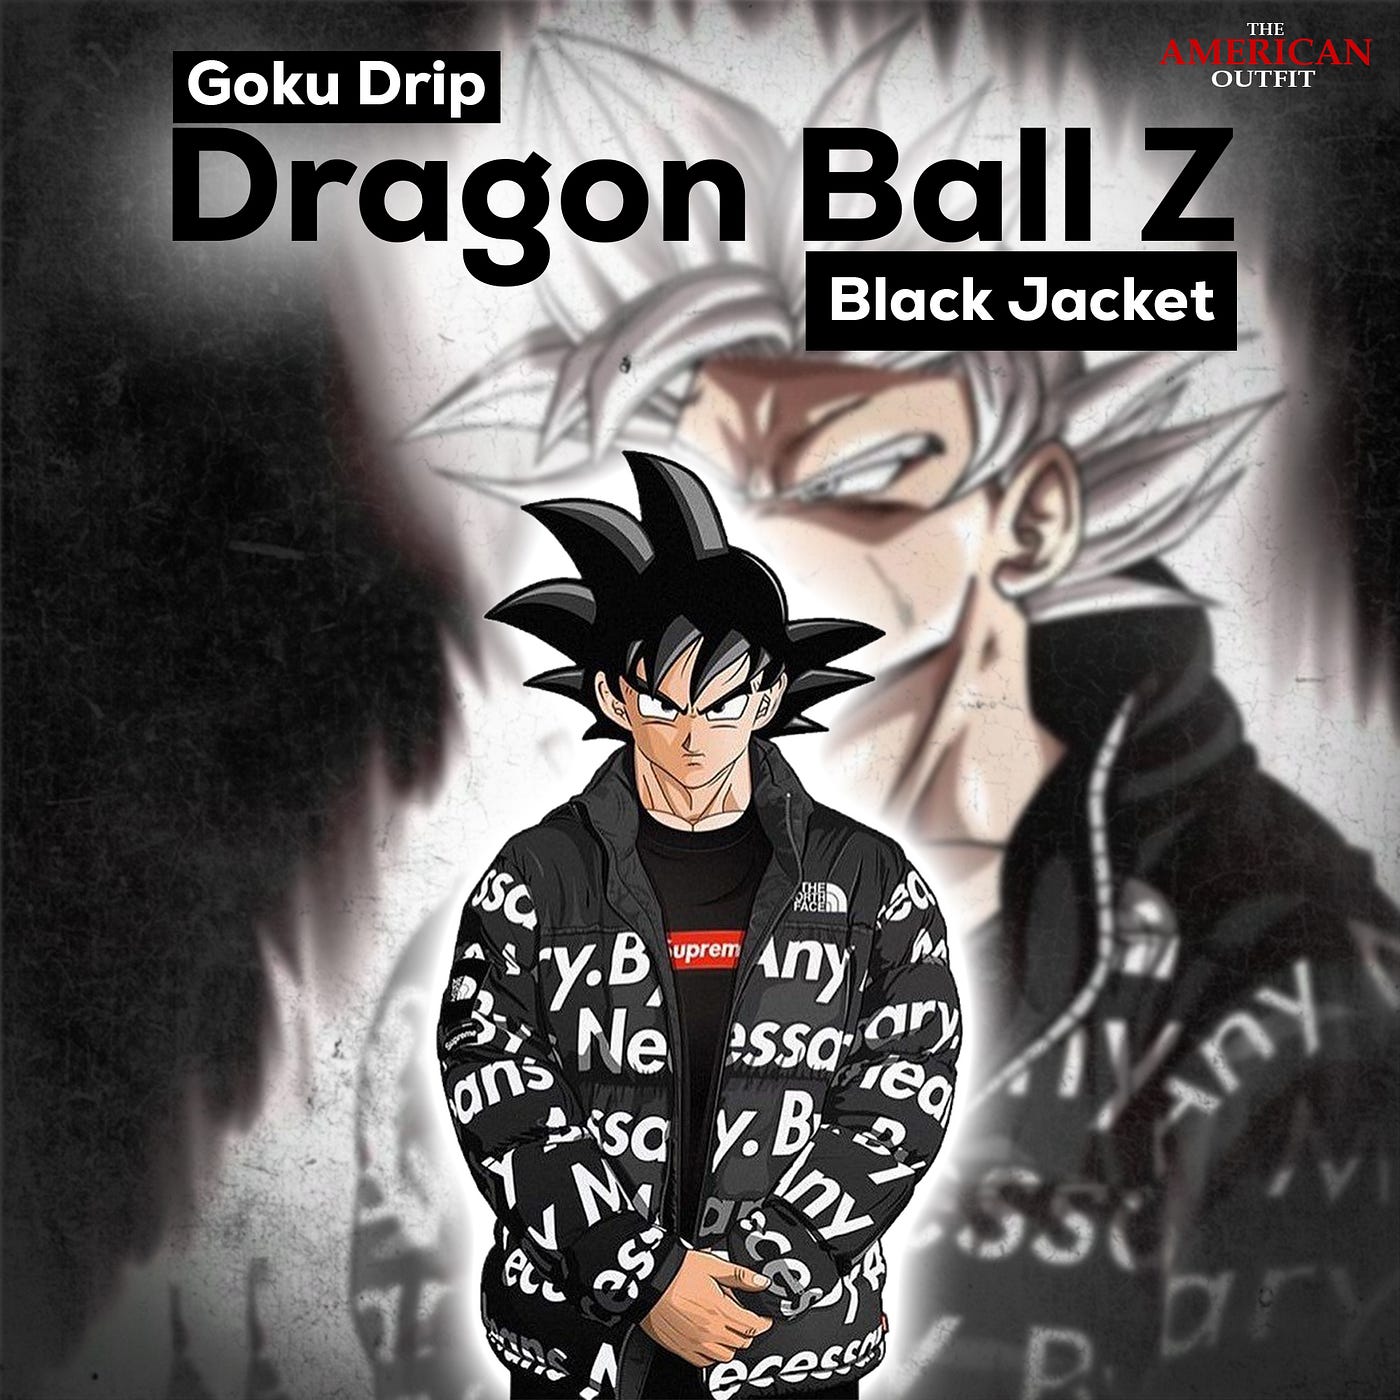 Goku Drip 